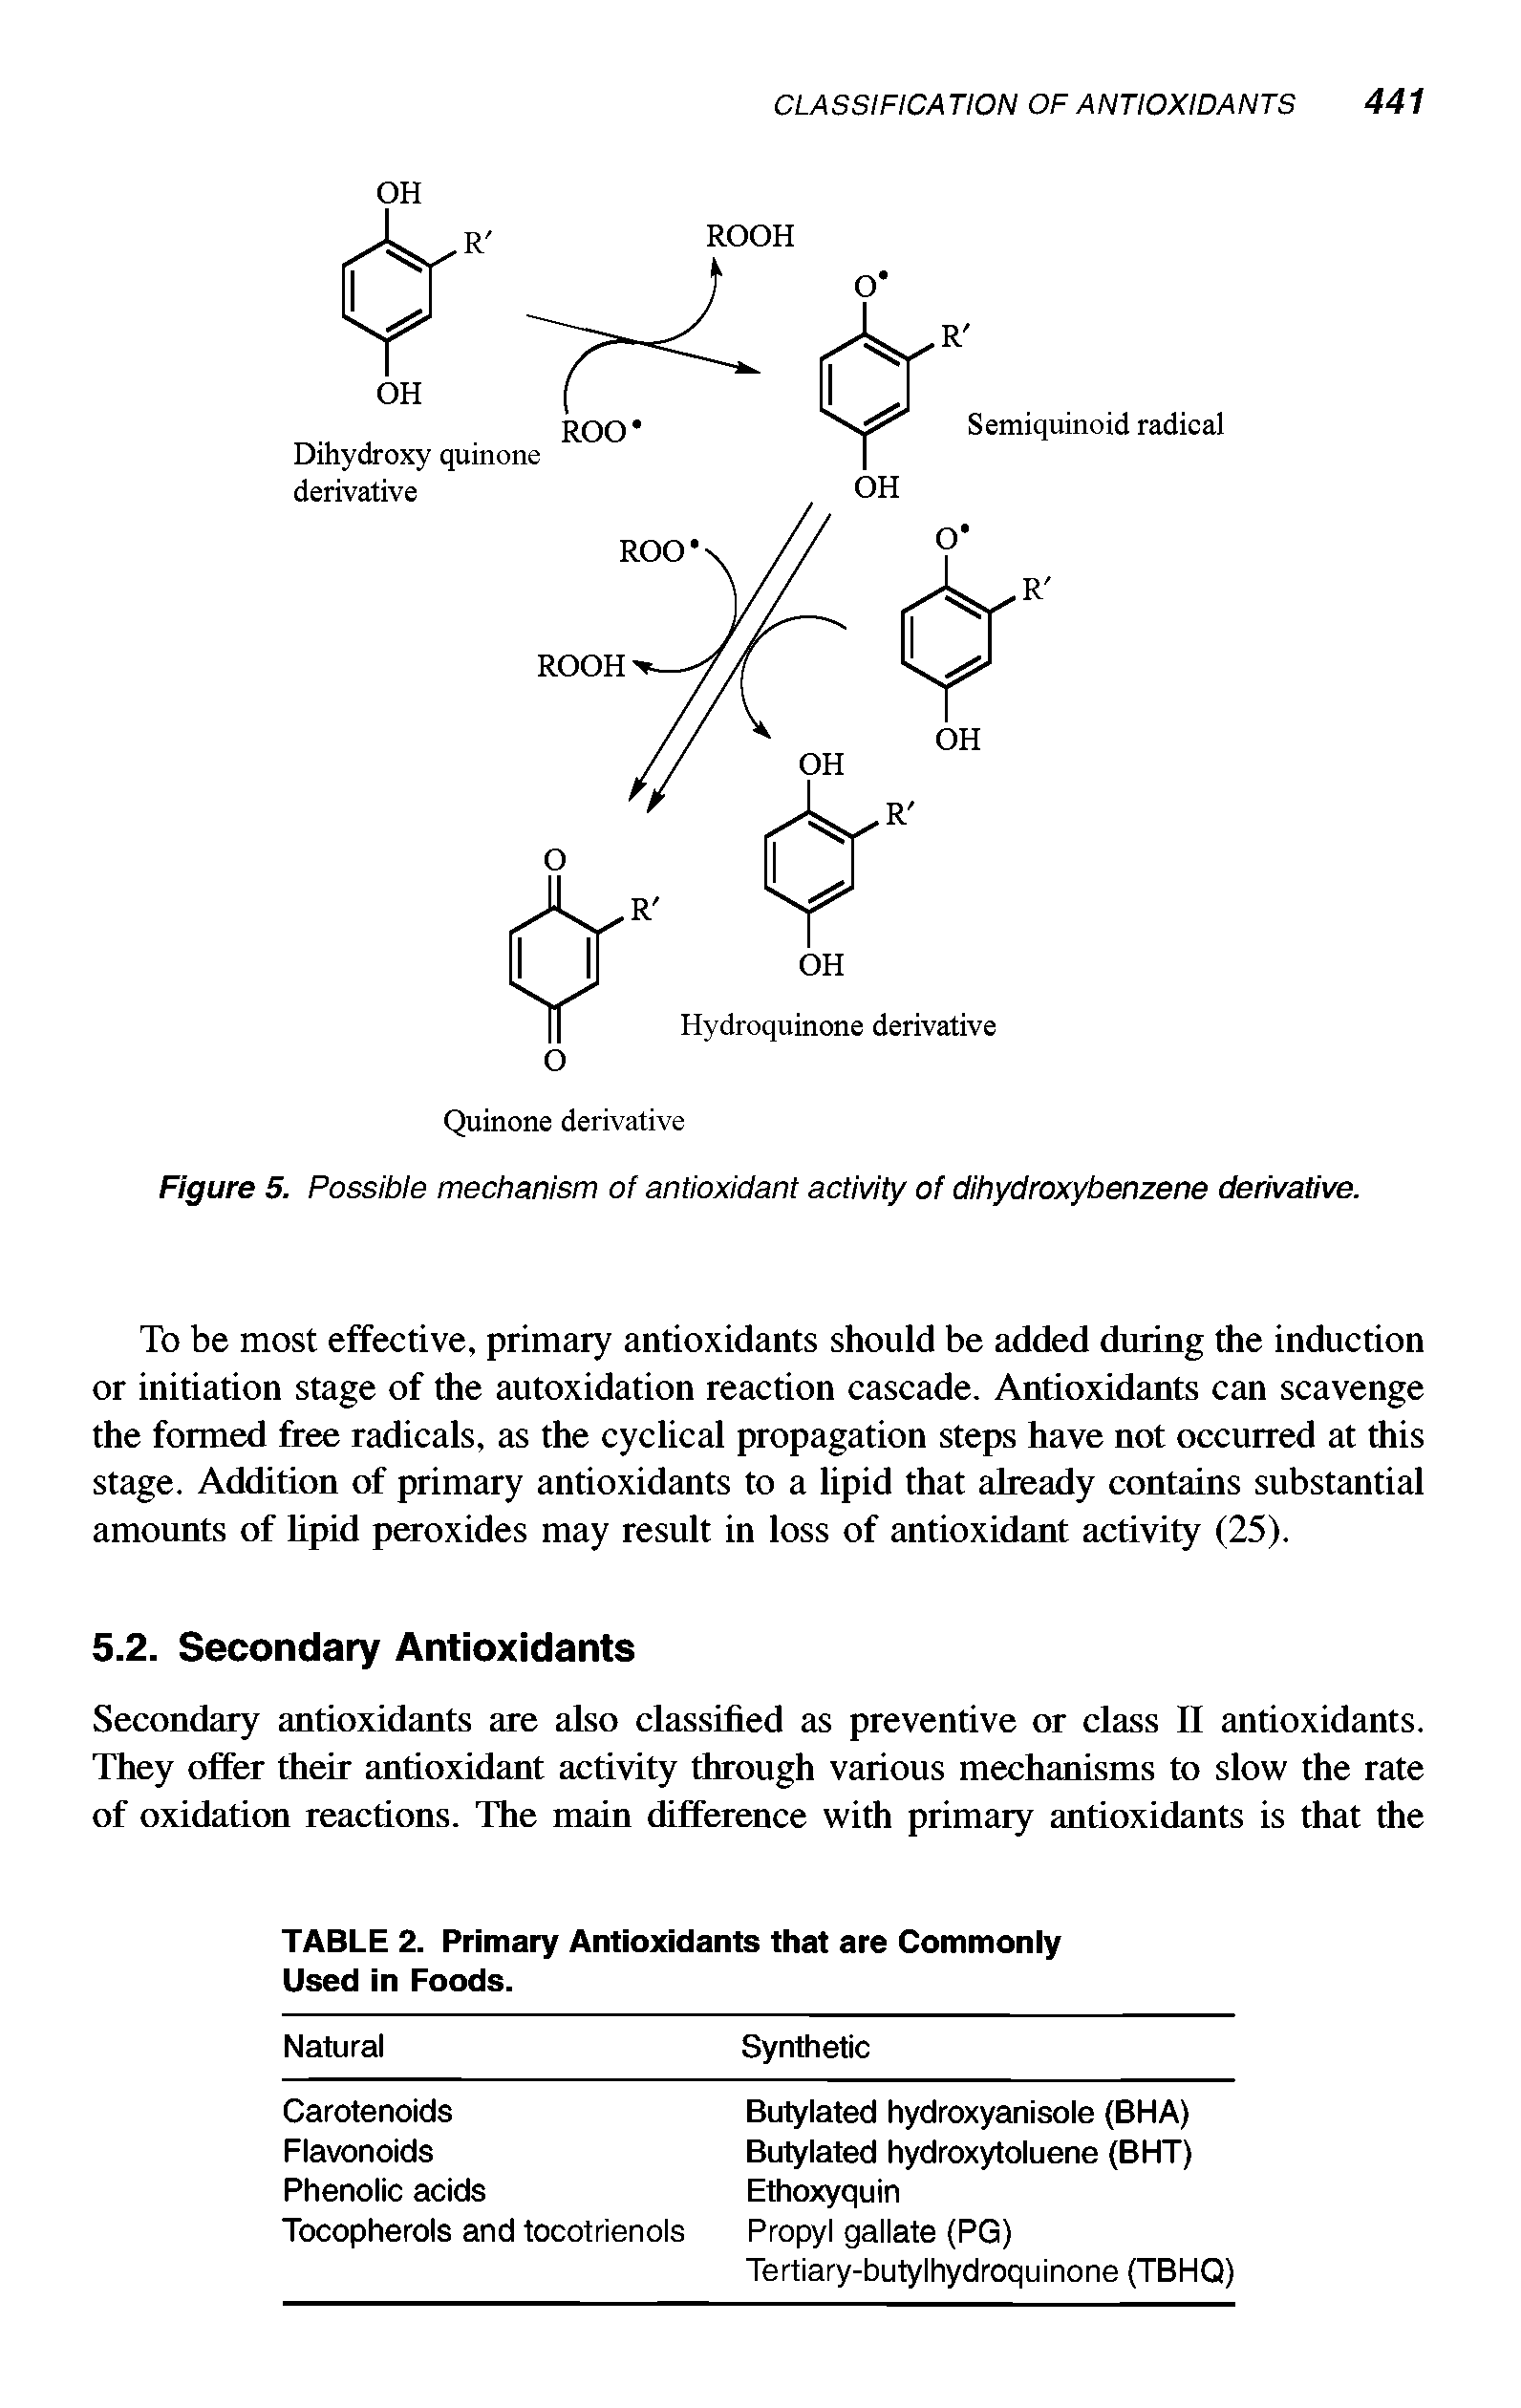 Figure 5. Possible mechanism of antioxidant activity of dihydroxybenzene derivative.